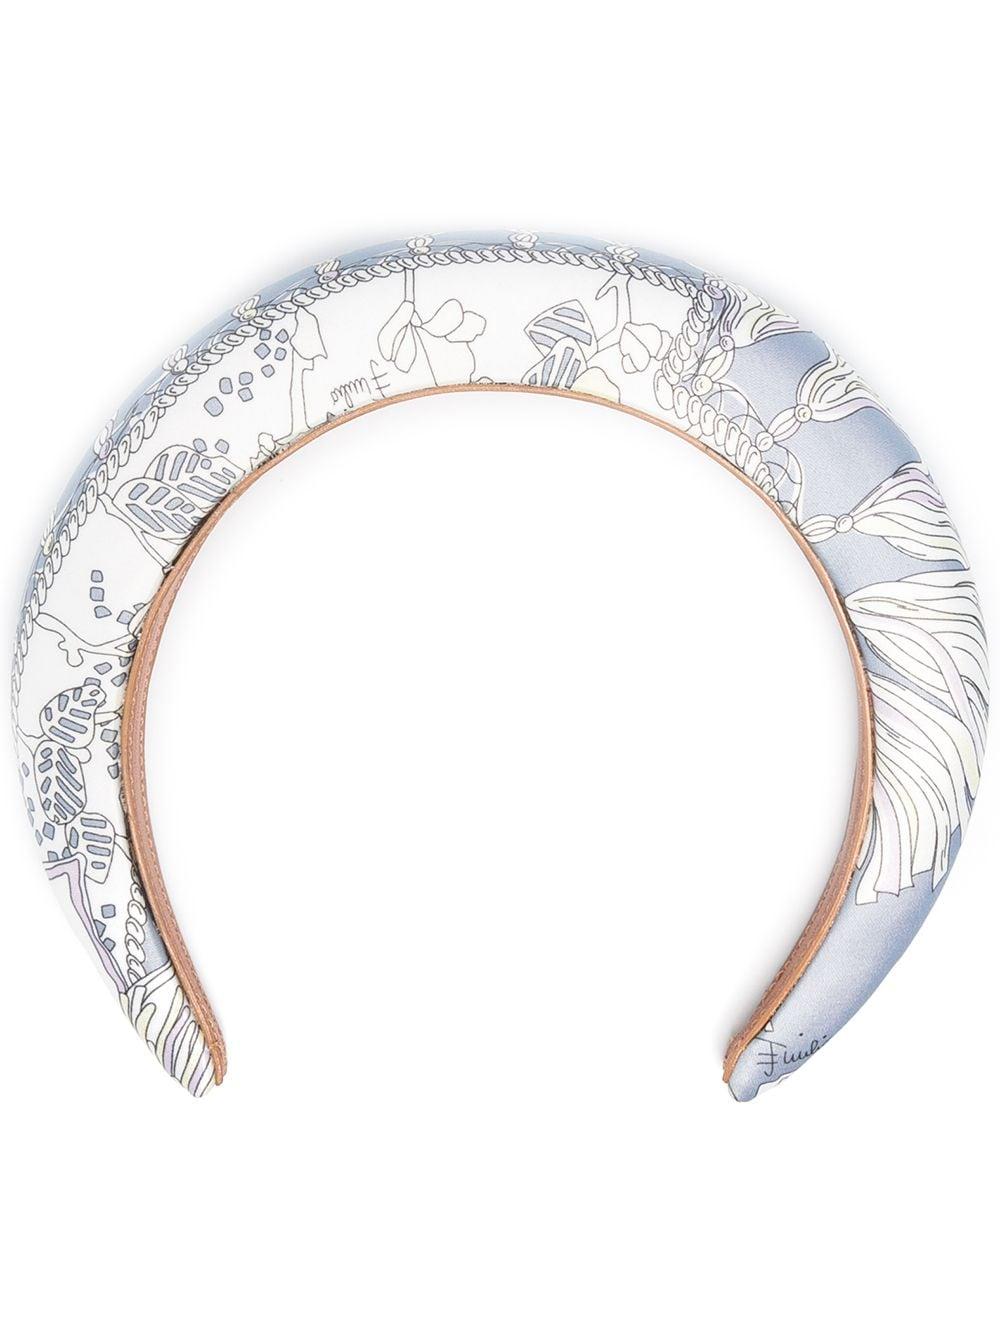 Emilio Pucci Printed Headband Womens Accessories Headbands hair clips and hair accessories 